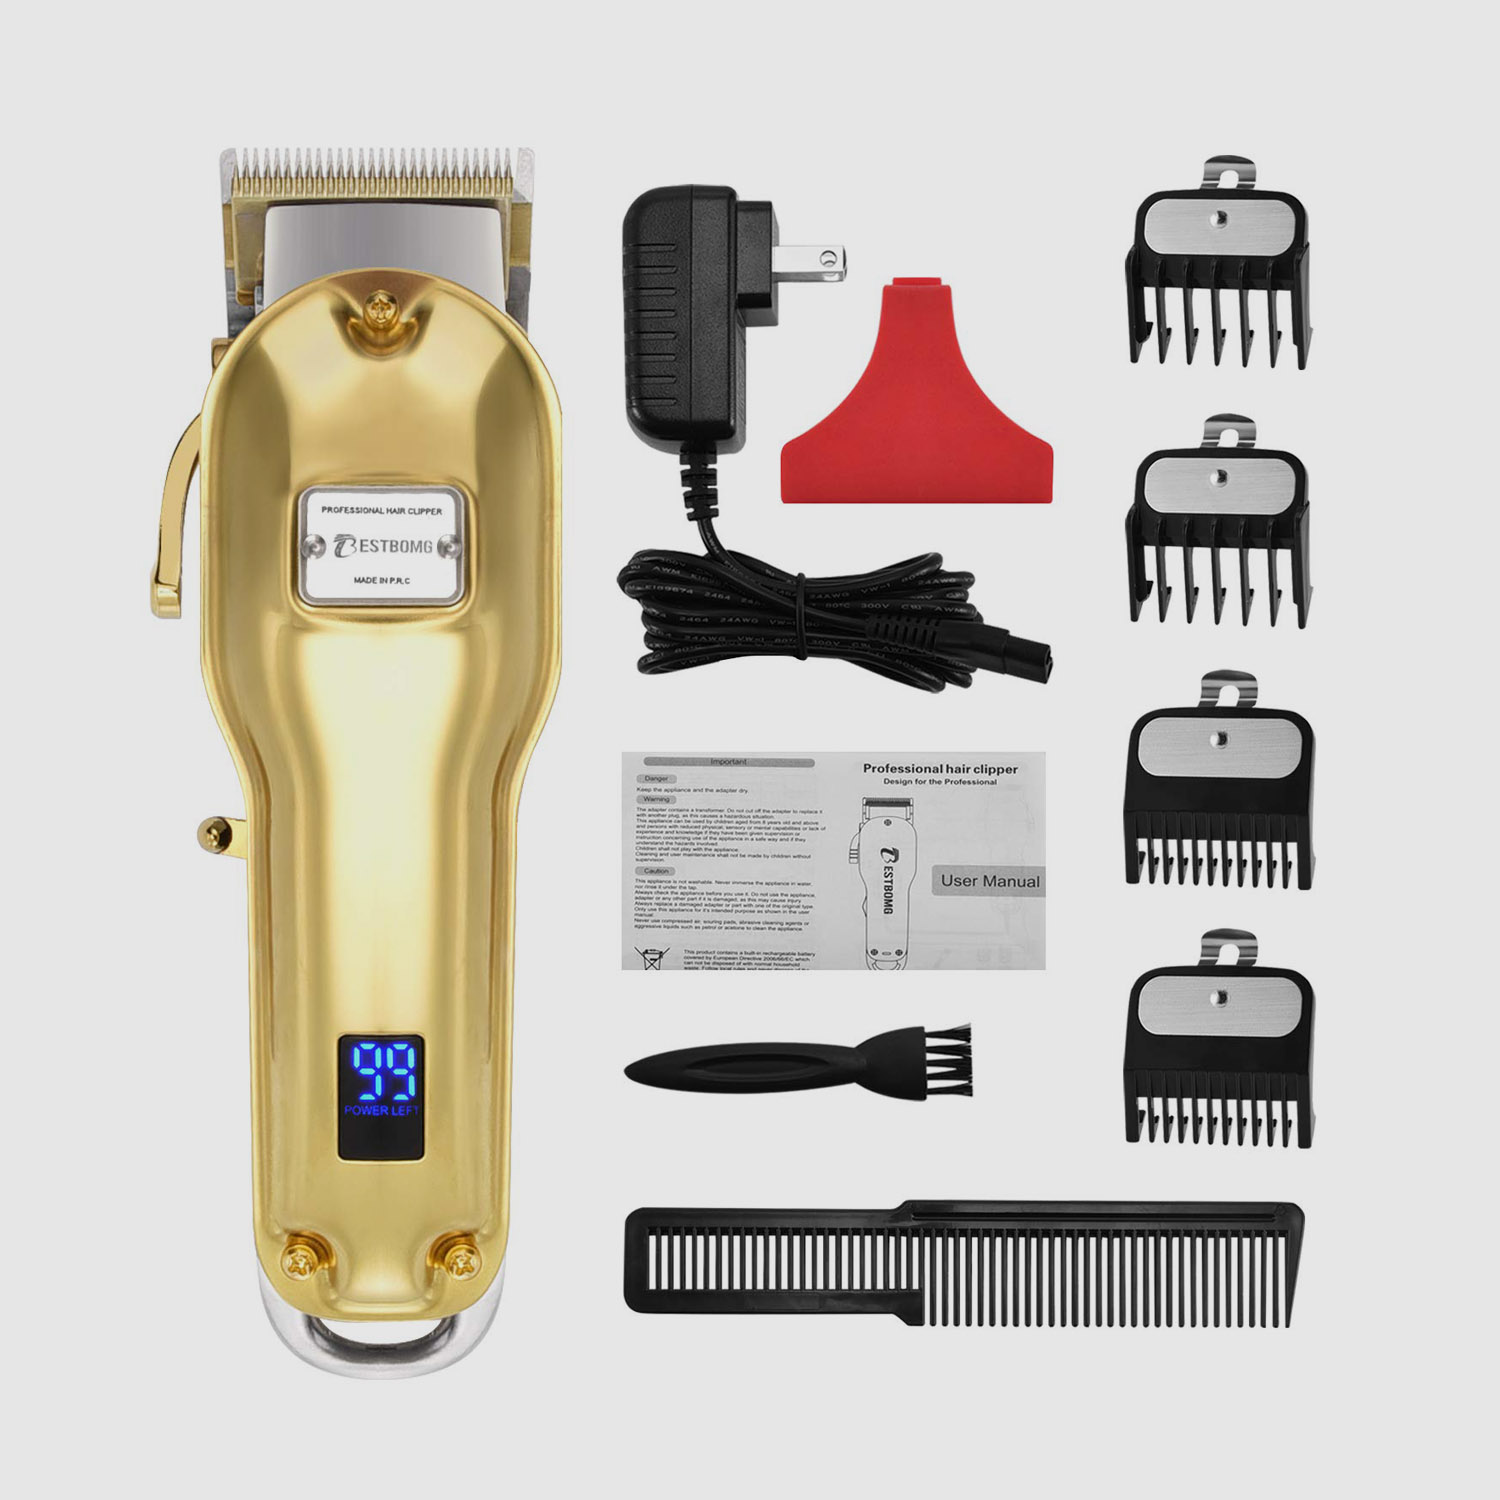 Professional Cordless Haircut Kit LED Display